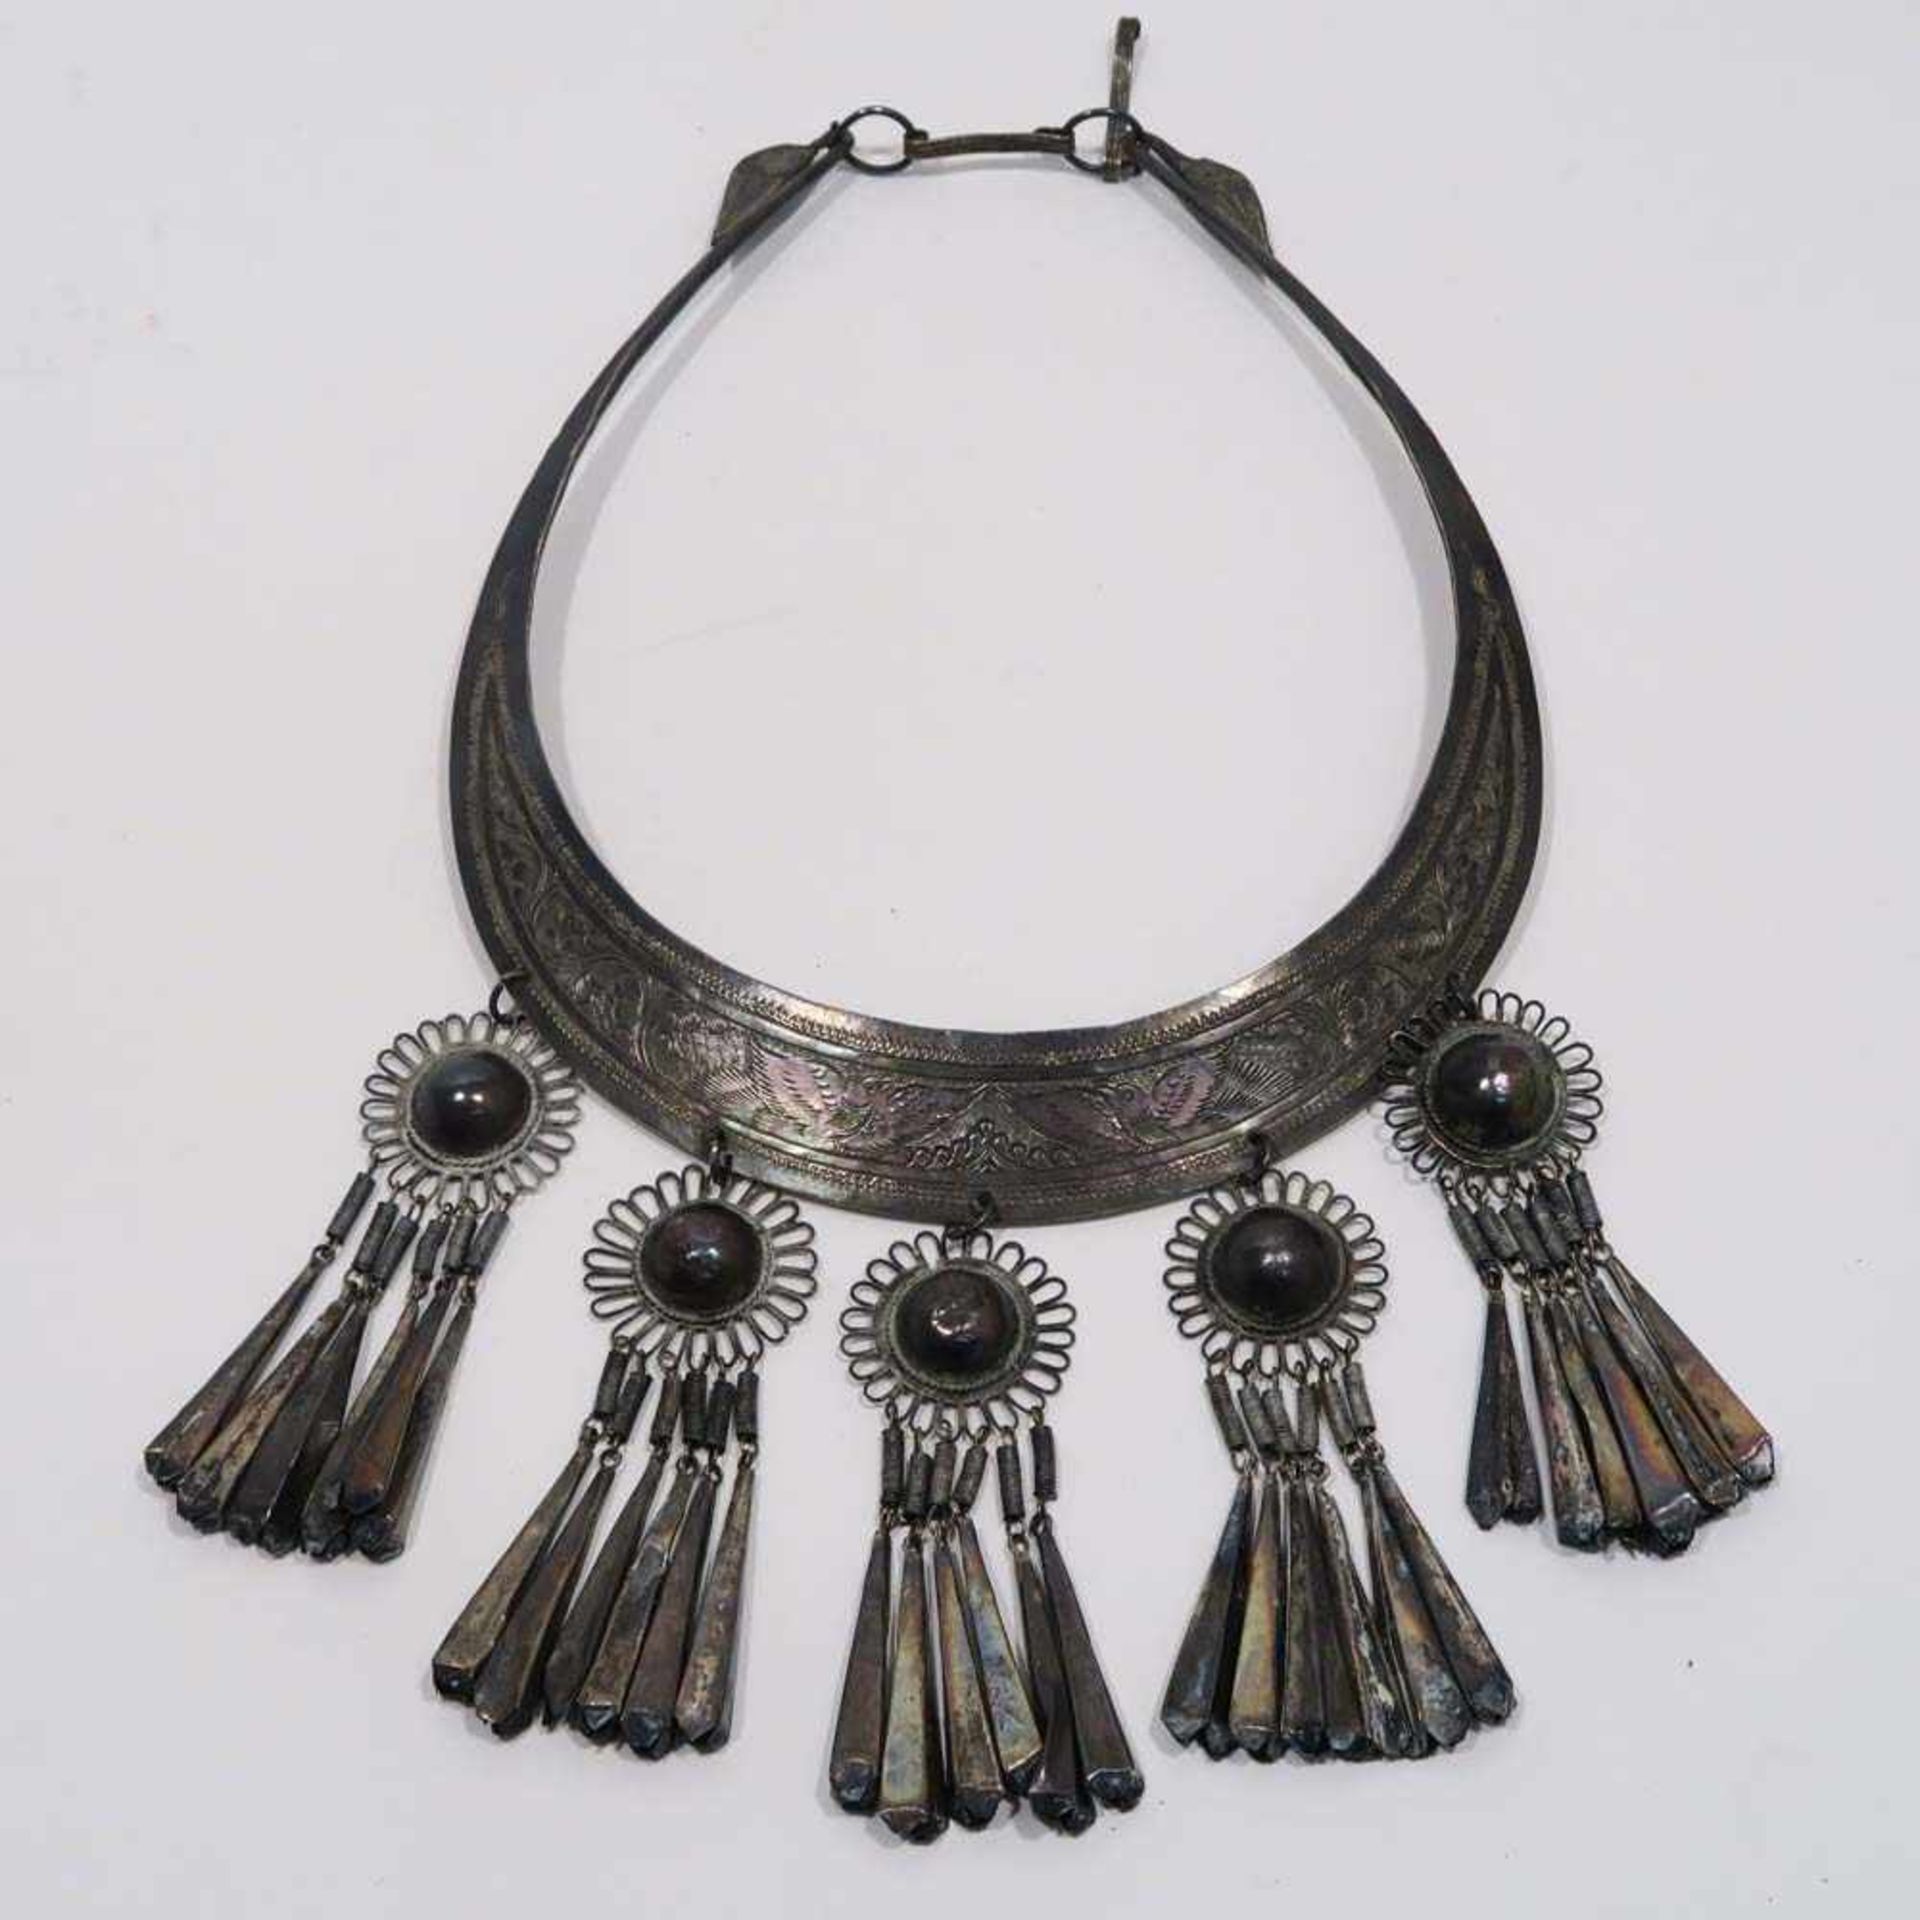 HalsreifWohl Zentralasien. Silber. Eingeritzter Vogeldekor, behangen mit kegelförmigen Schellen an